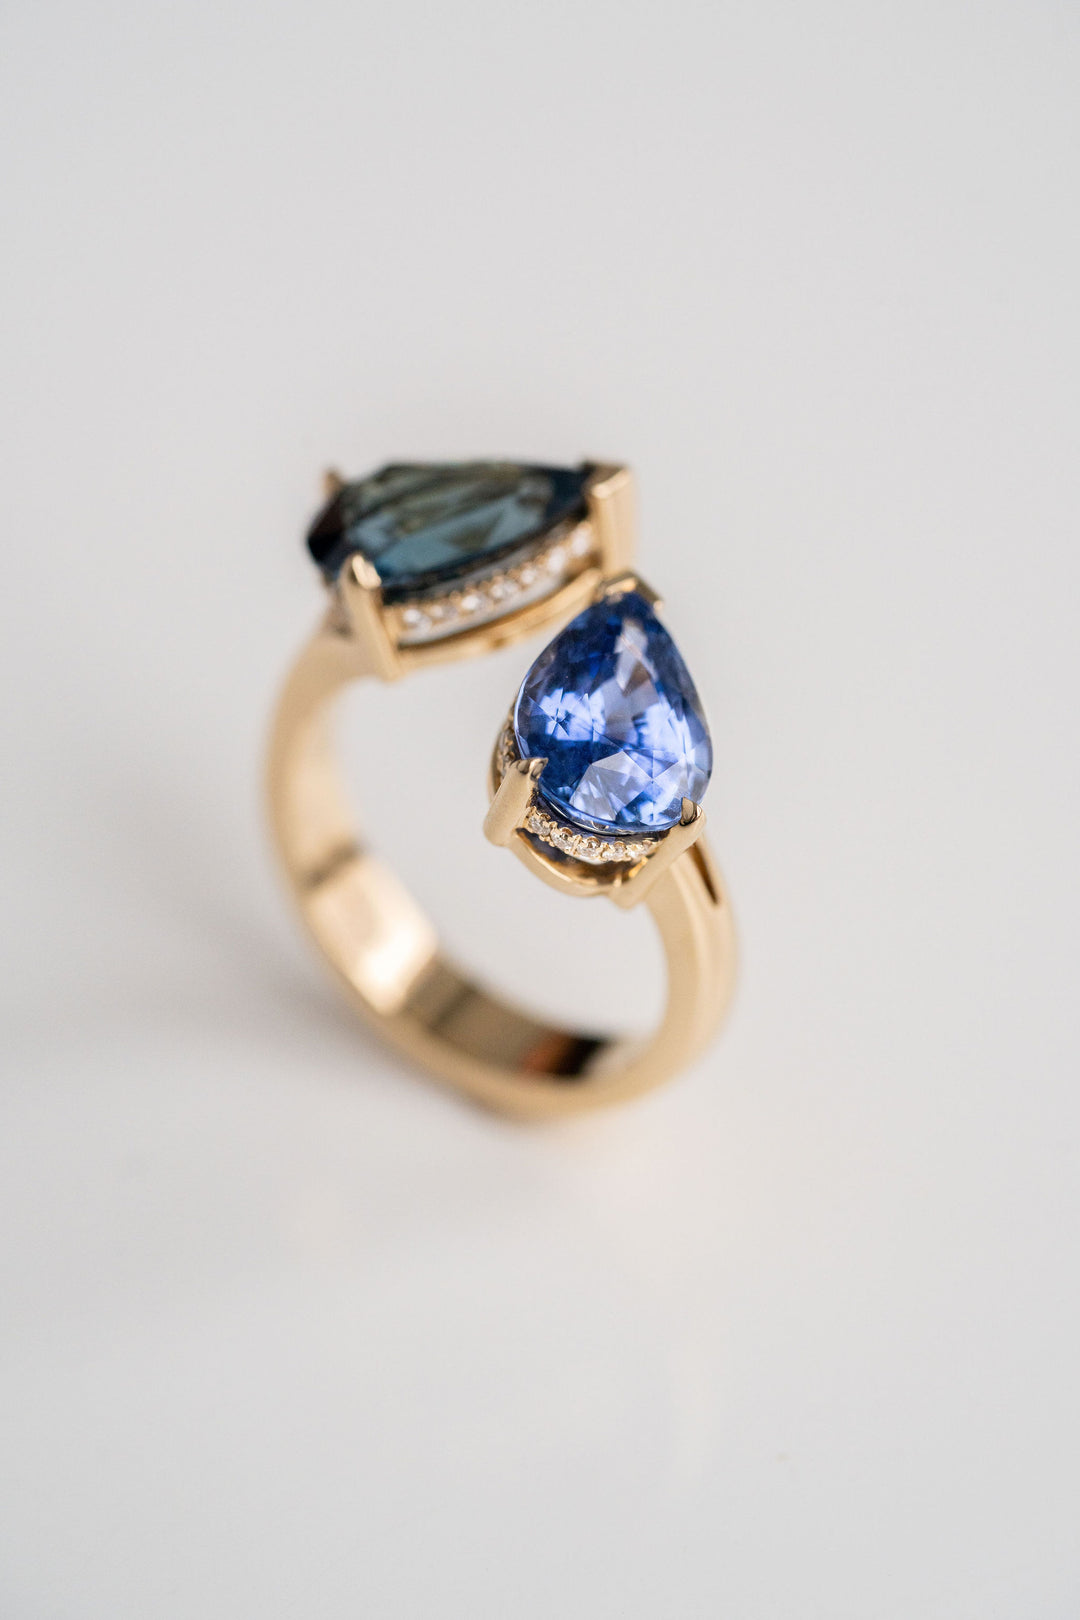 Pear Shape Blue & Teal Sri Lankan Sapphire Toi et Moi Gap Ring With Diamond Collar, 14k Yellow Gold